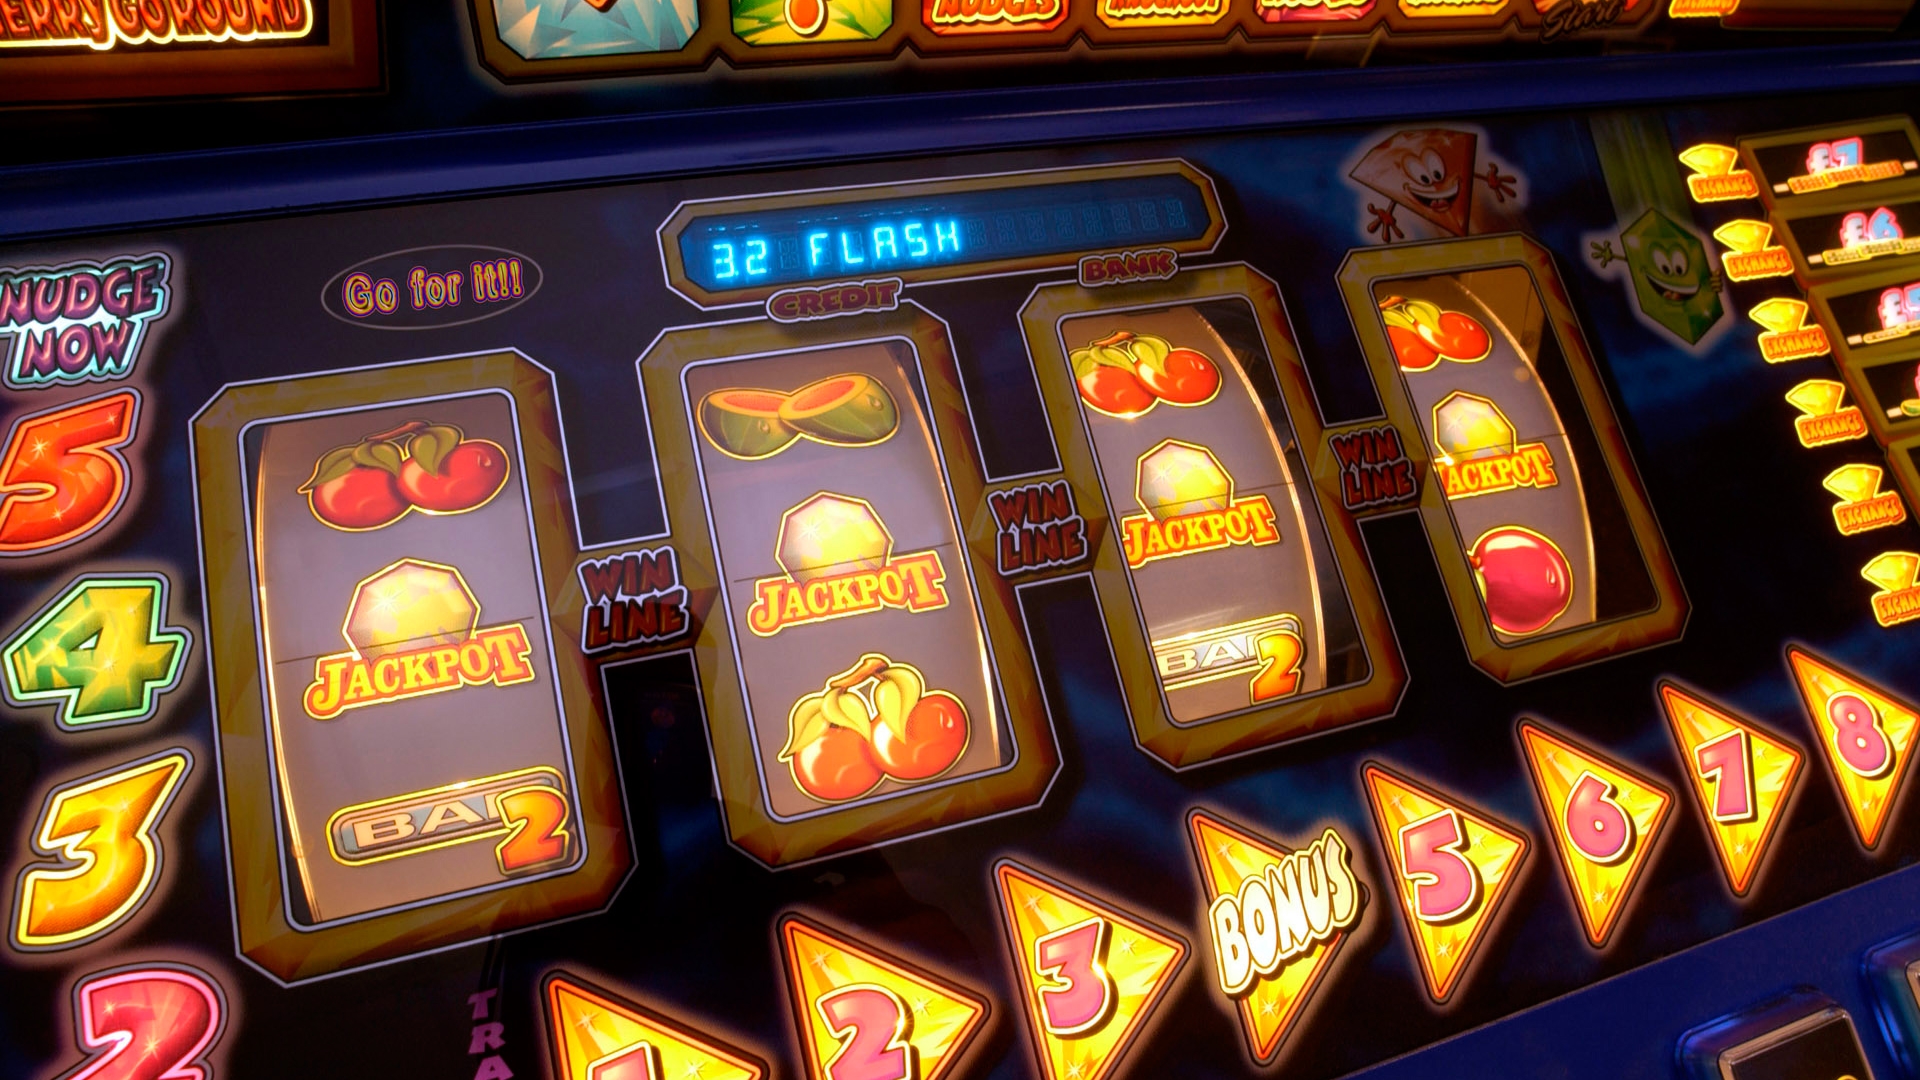 Different online slot machines in UK casinos